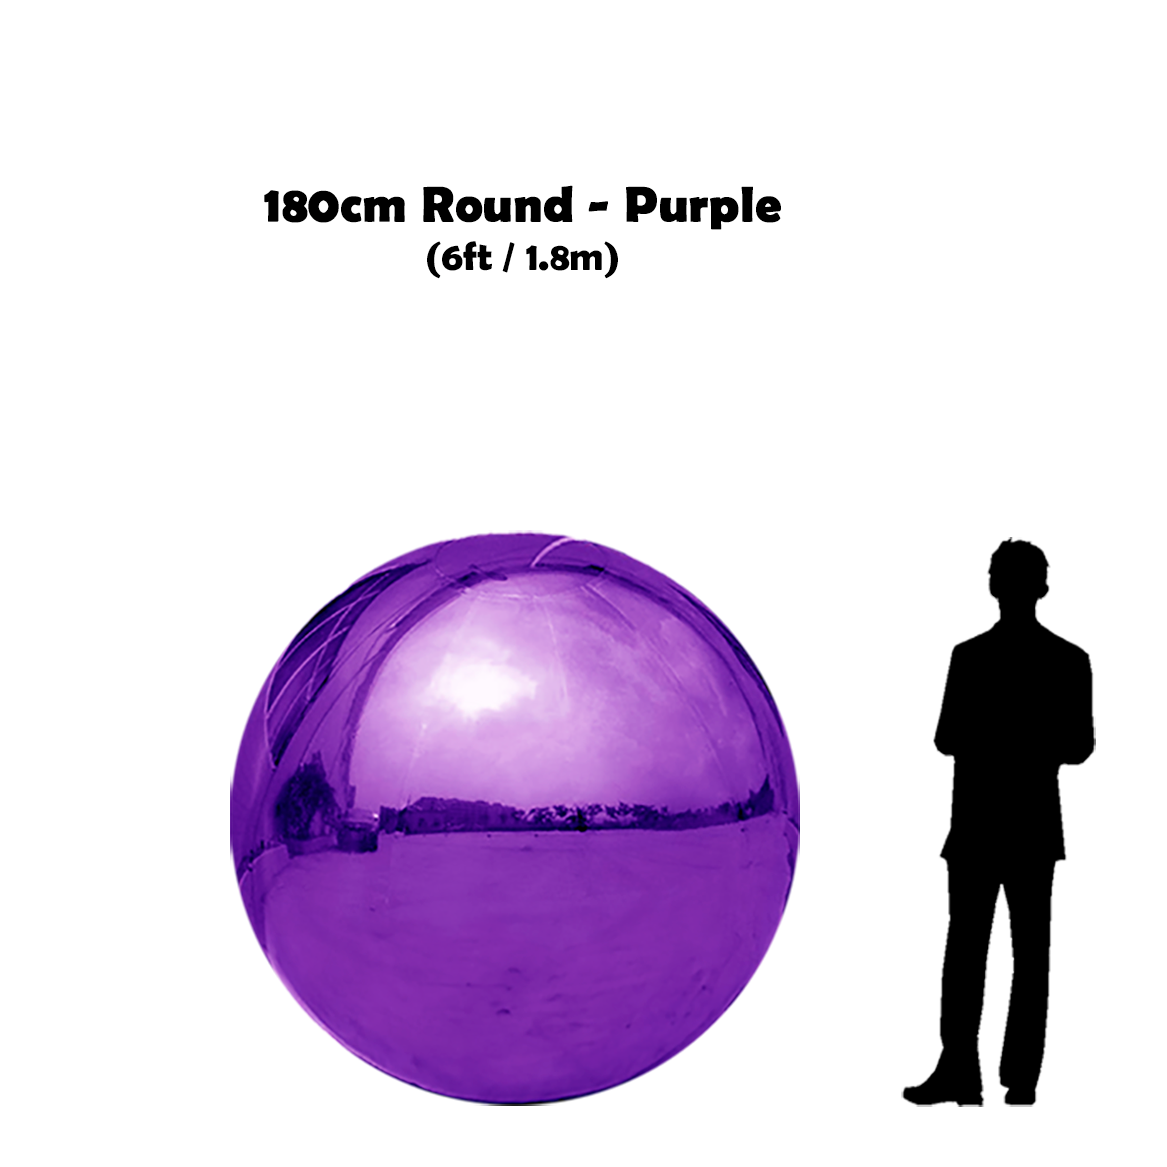 180cm round purple ball